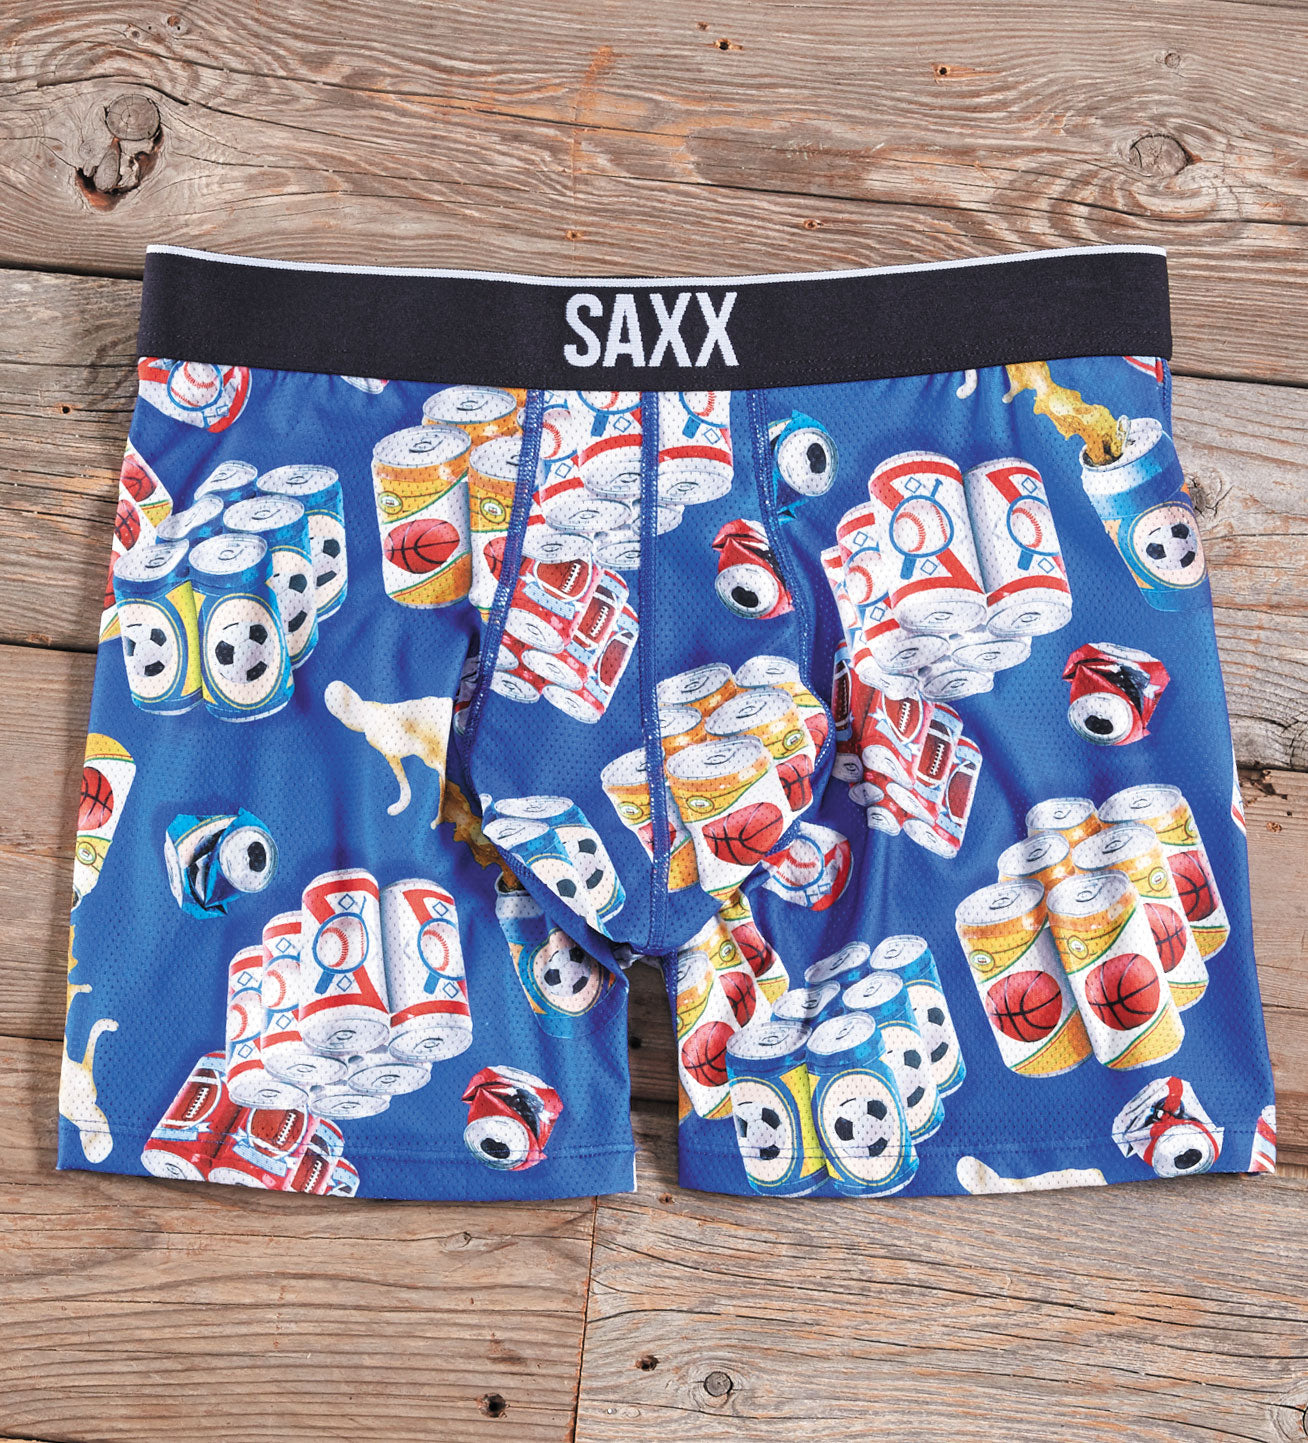 Saxx Men's Briefs and Boxers